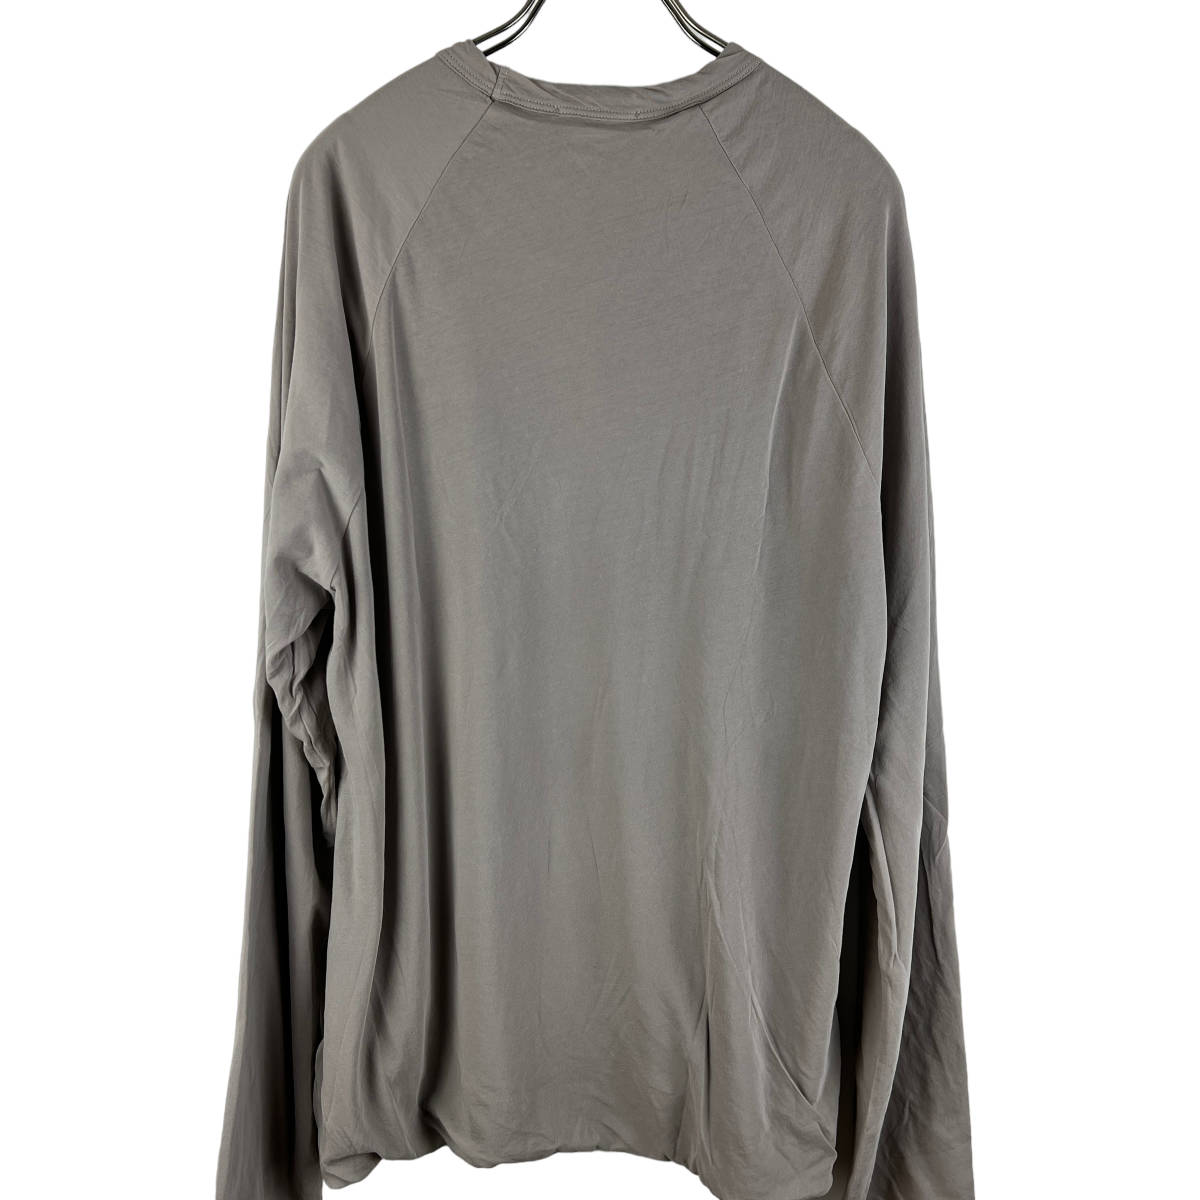 JAMESPERSE(ジェームスパース) Stretch Material Long T Shirt (grey)